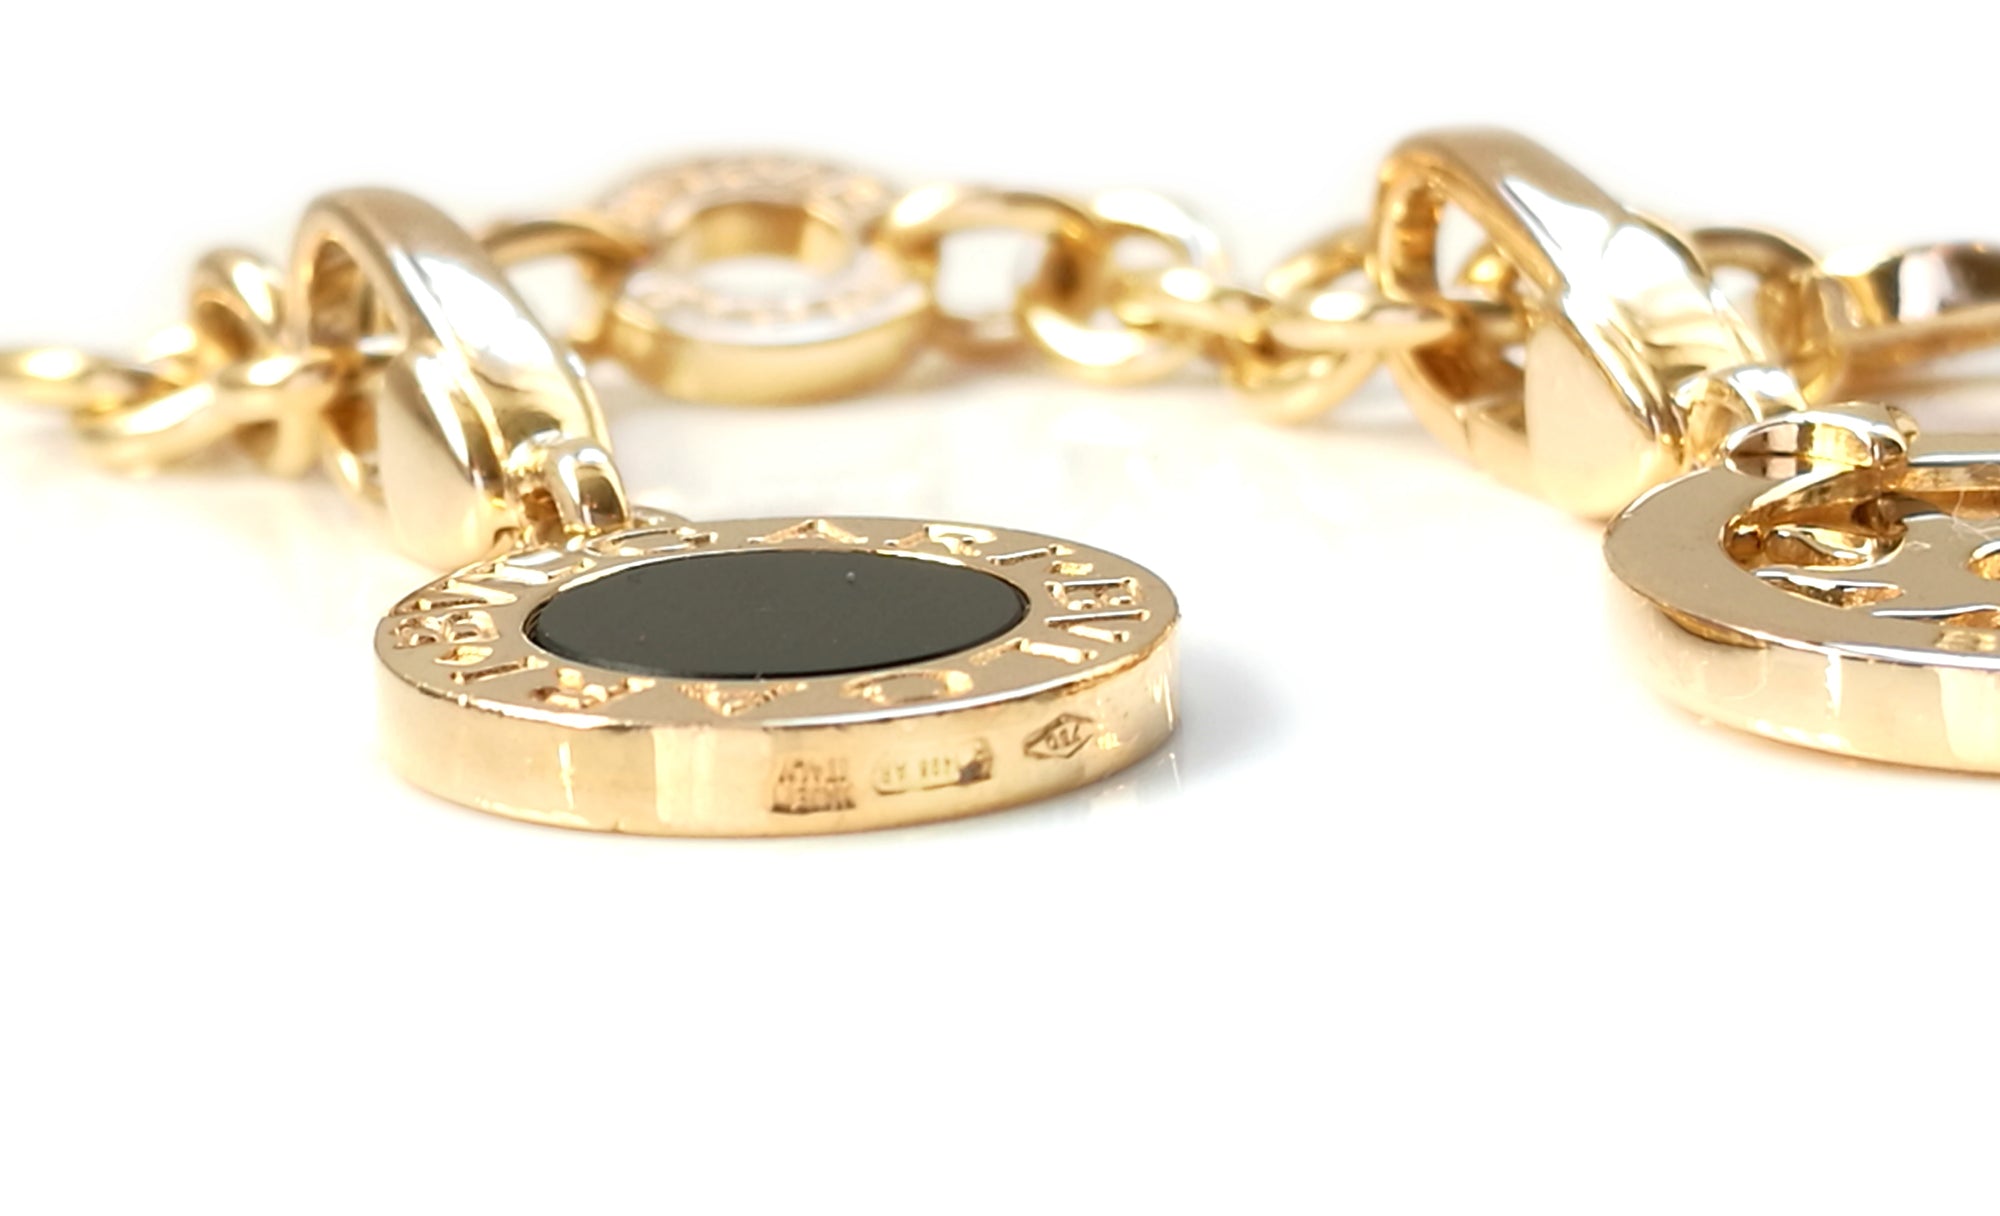 Bulgari Bvlgari 5 Charm Bracelet in 18k Yellow Gold